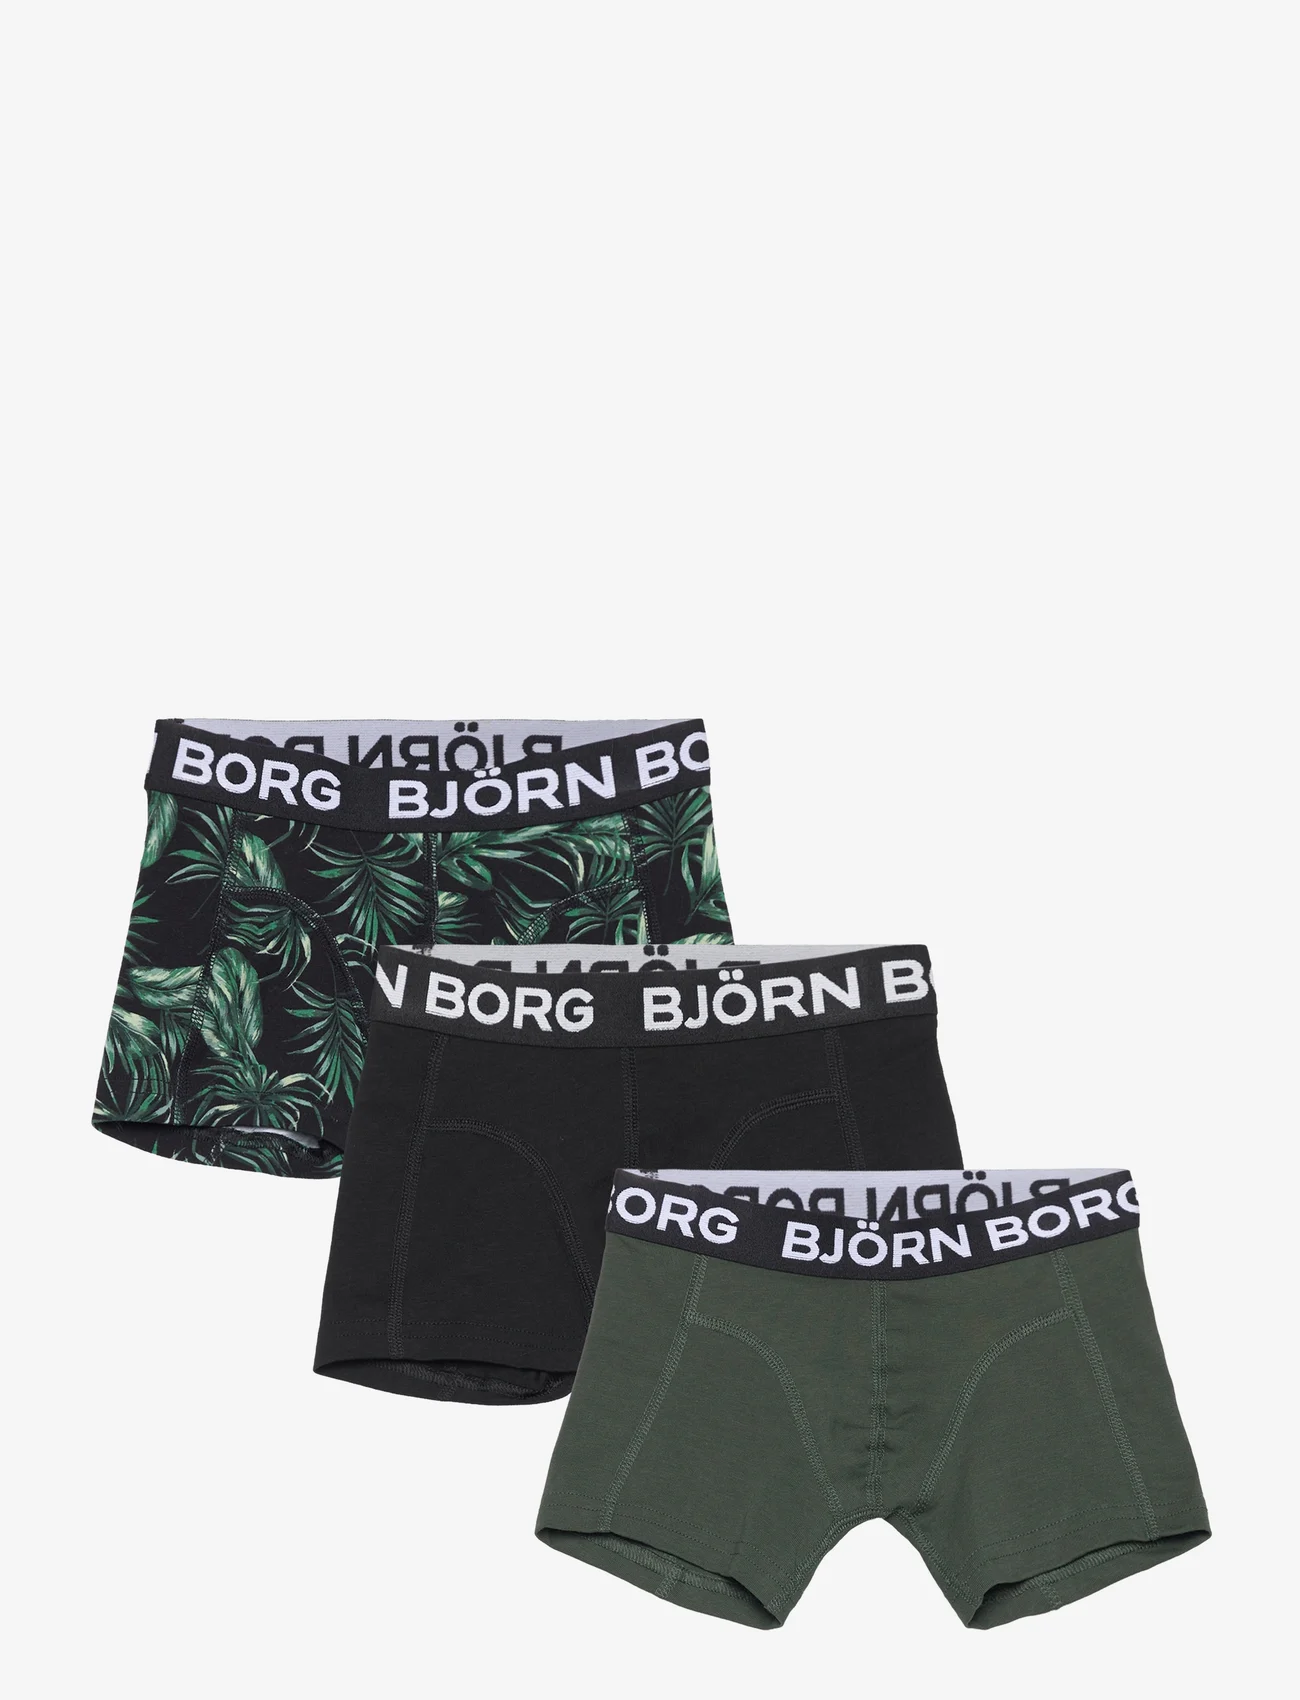 Björn Borg - CORE BOXER 3p - underpants - multipack 3 - 0